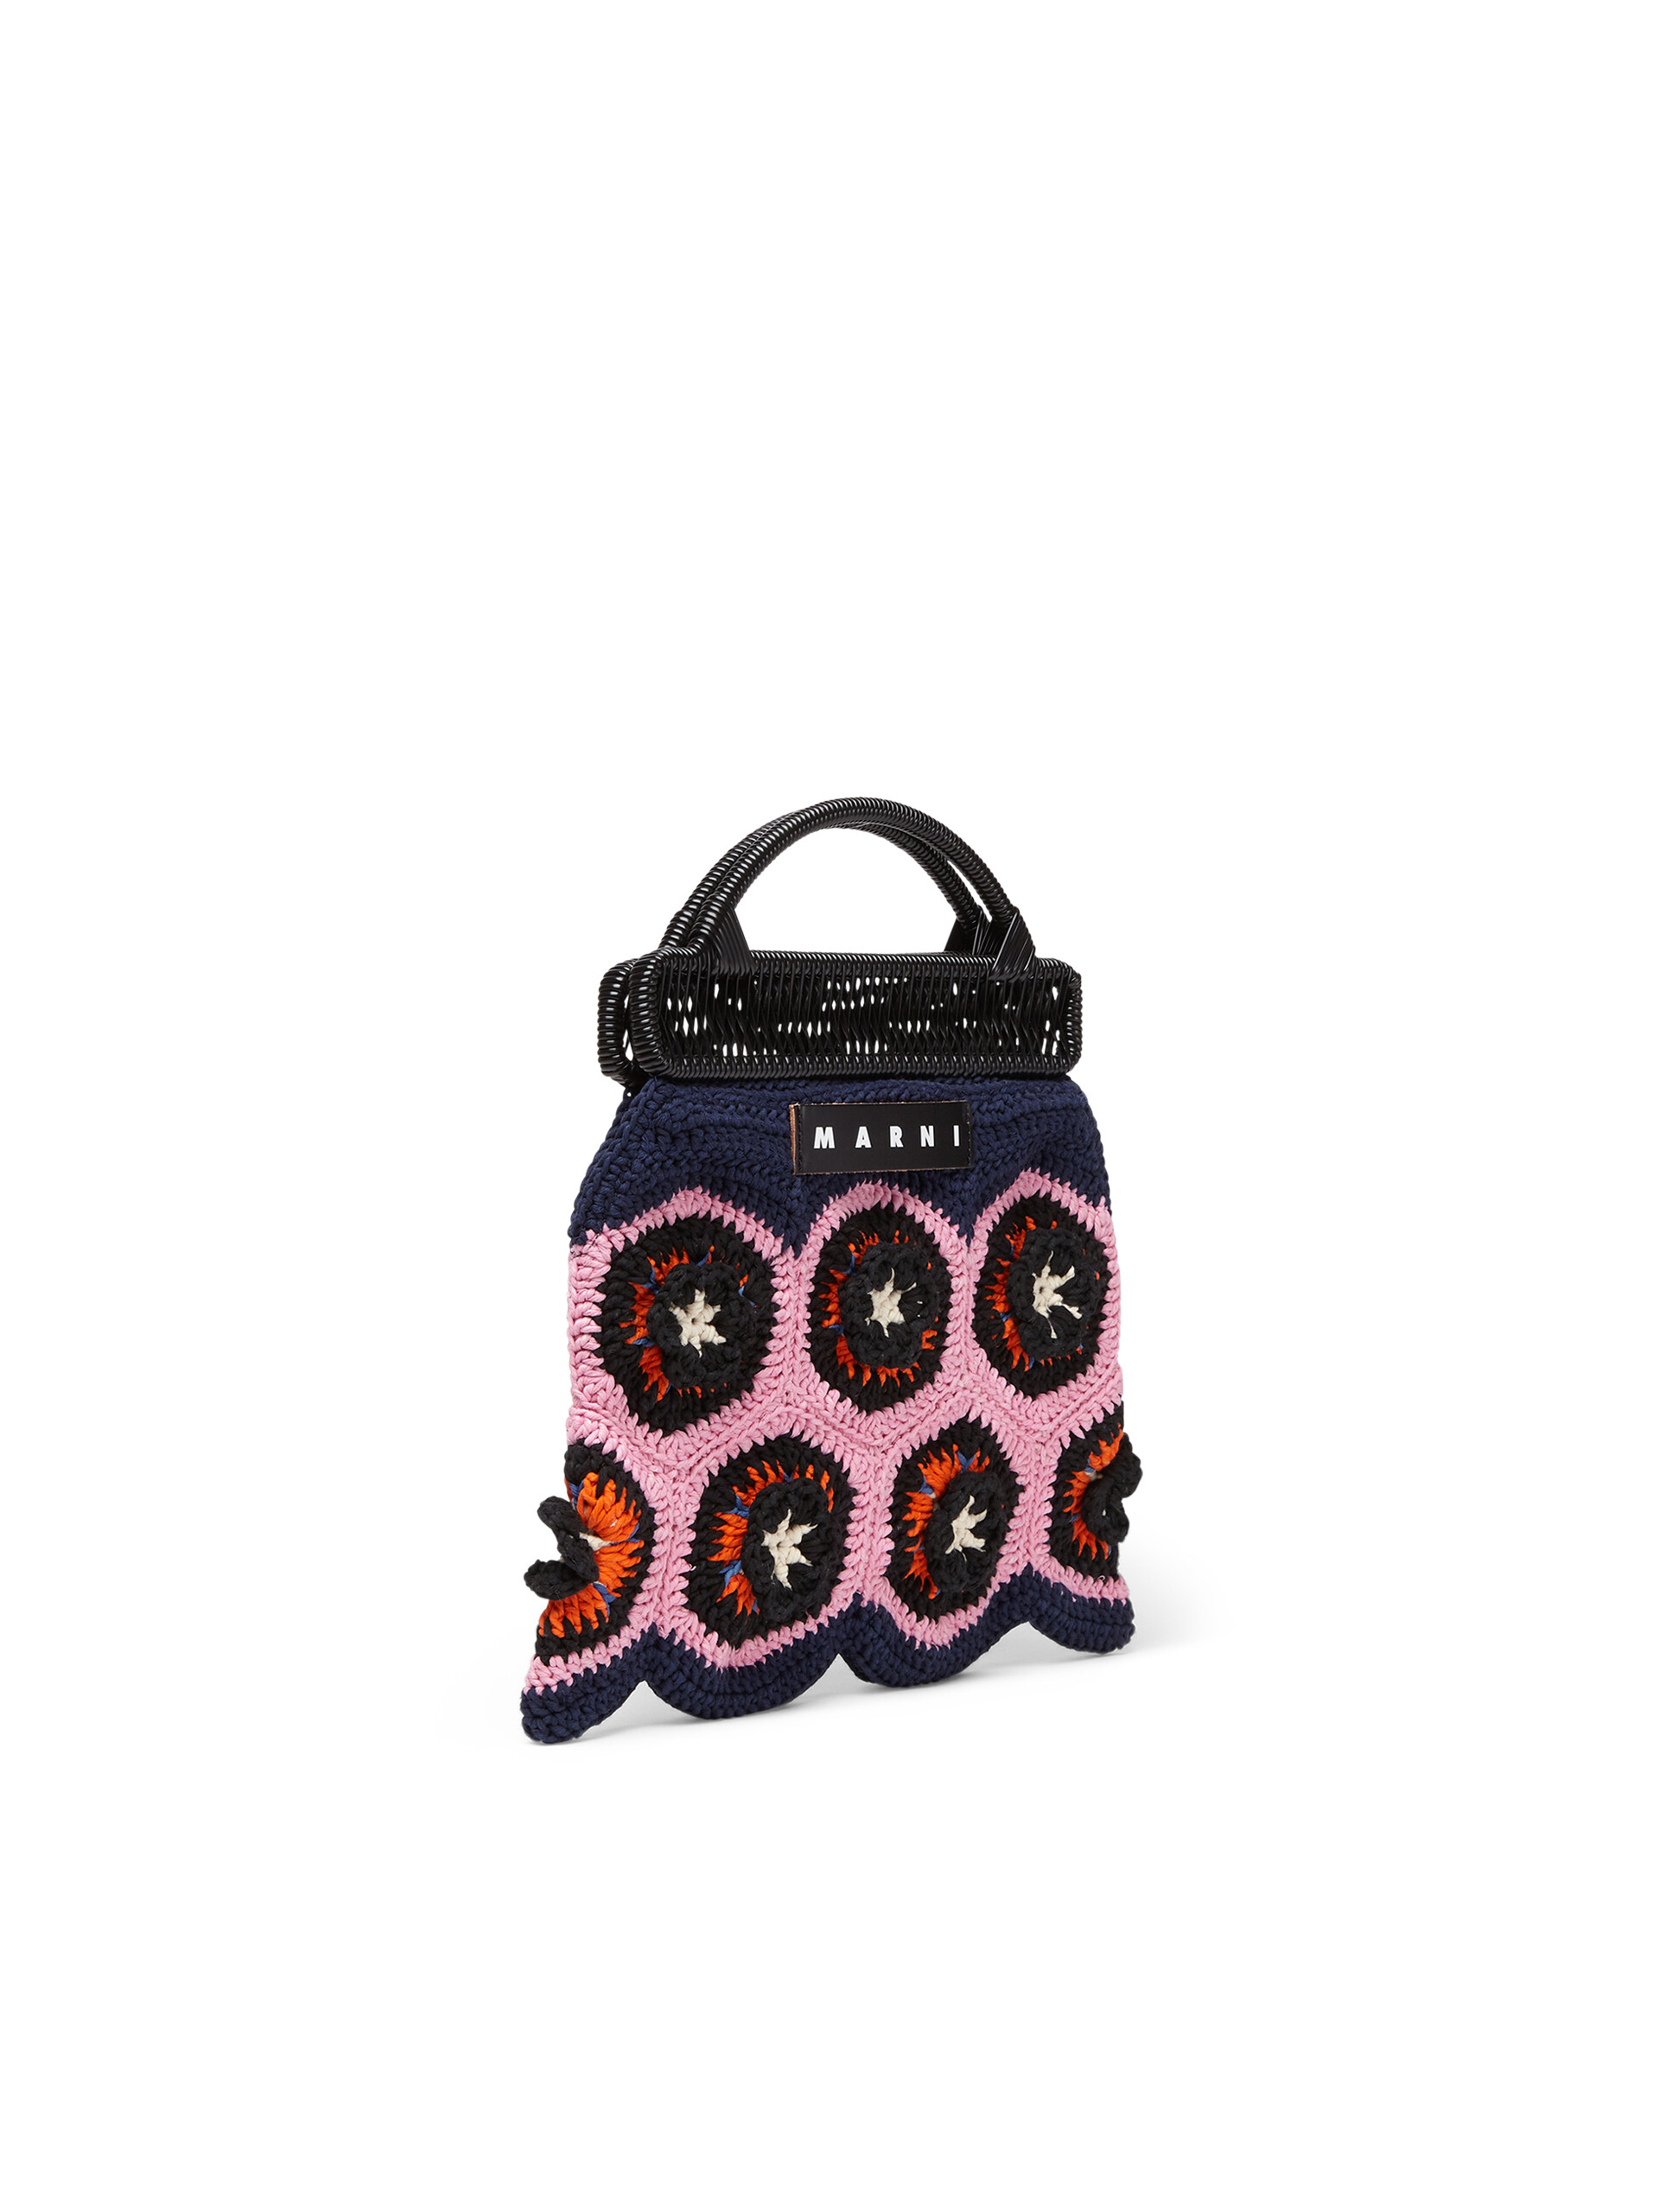 MARNI MARKET frame bag with floral motif in pink and blue crochet cotton blend - Furniture - Image 2